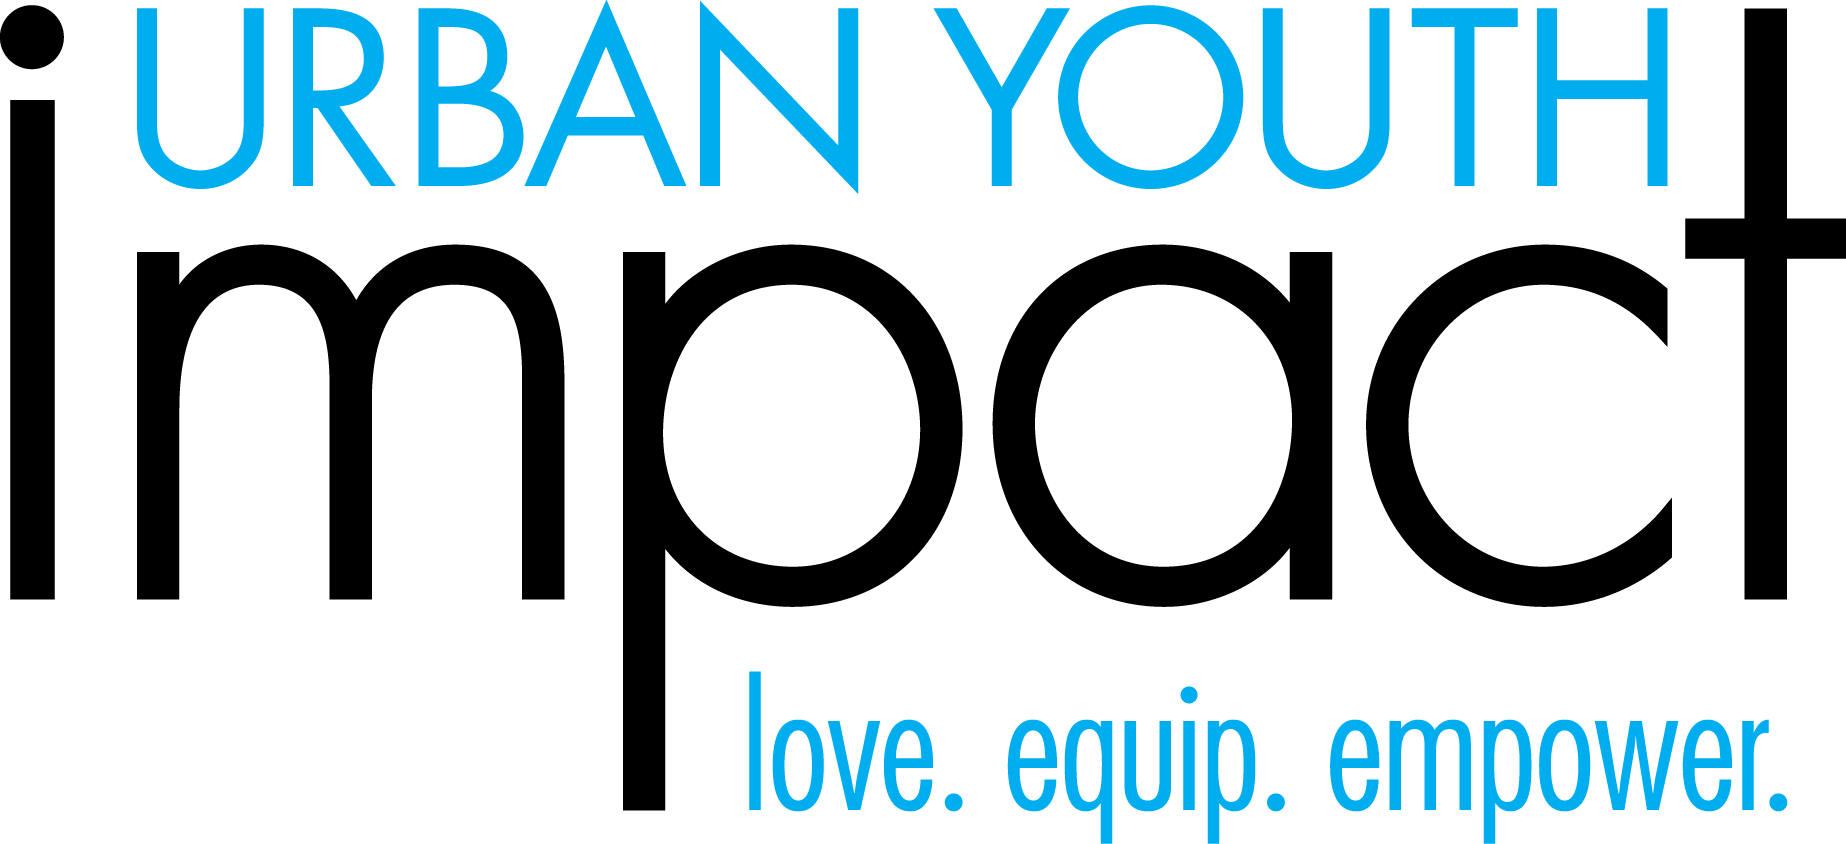 Urban Youth Impact, Inc. logo